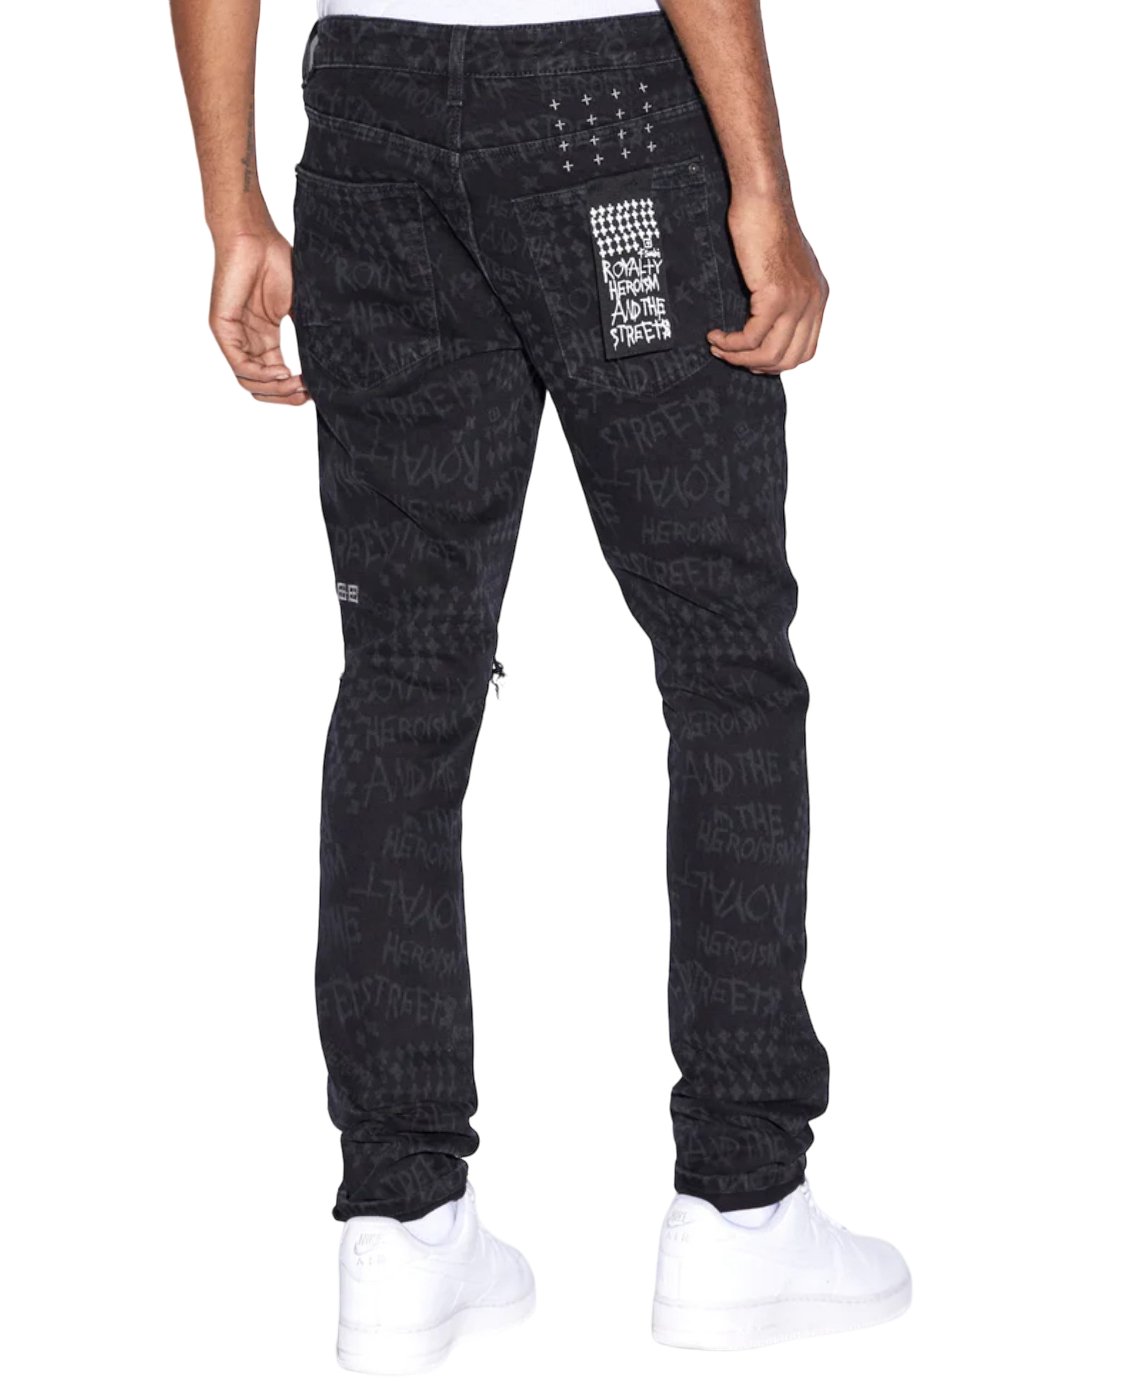 The back view of a man wearing Ksubi Van Winkle Heroism Black ripped skinny jeans, featuring Ksubi-branded hardware.